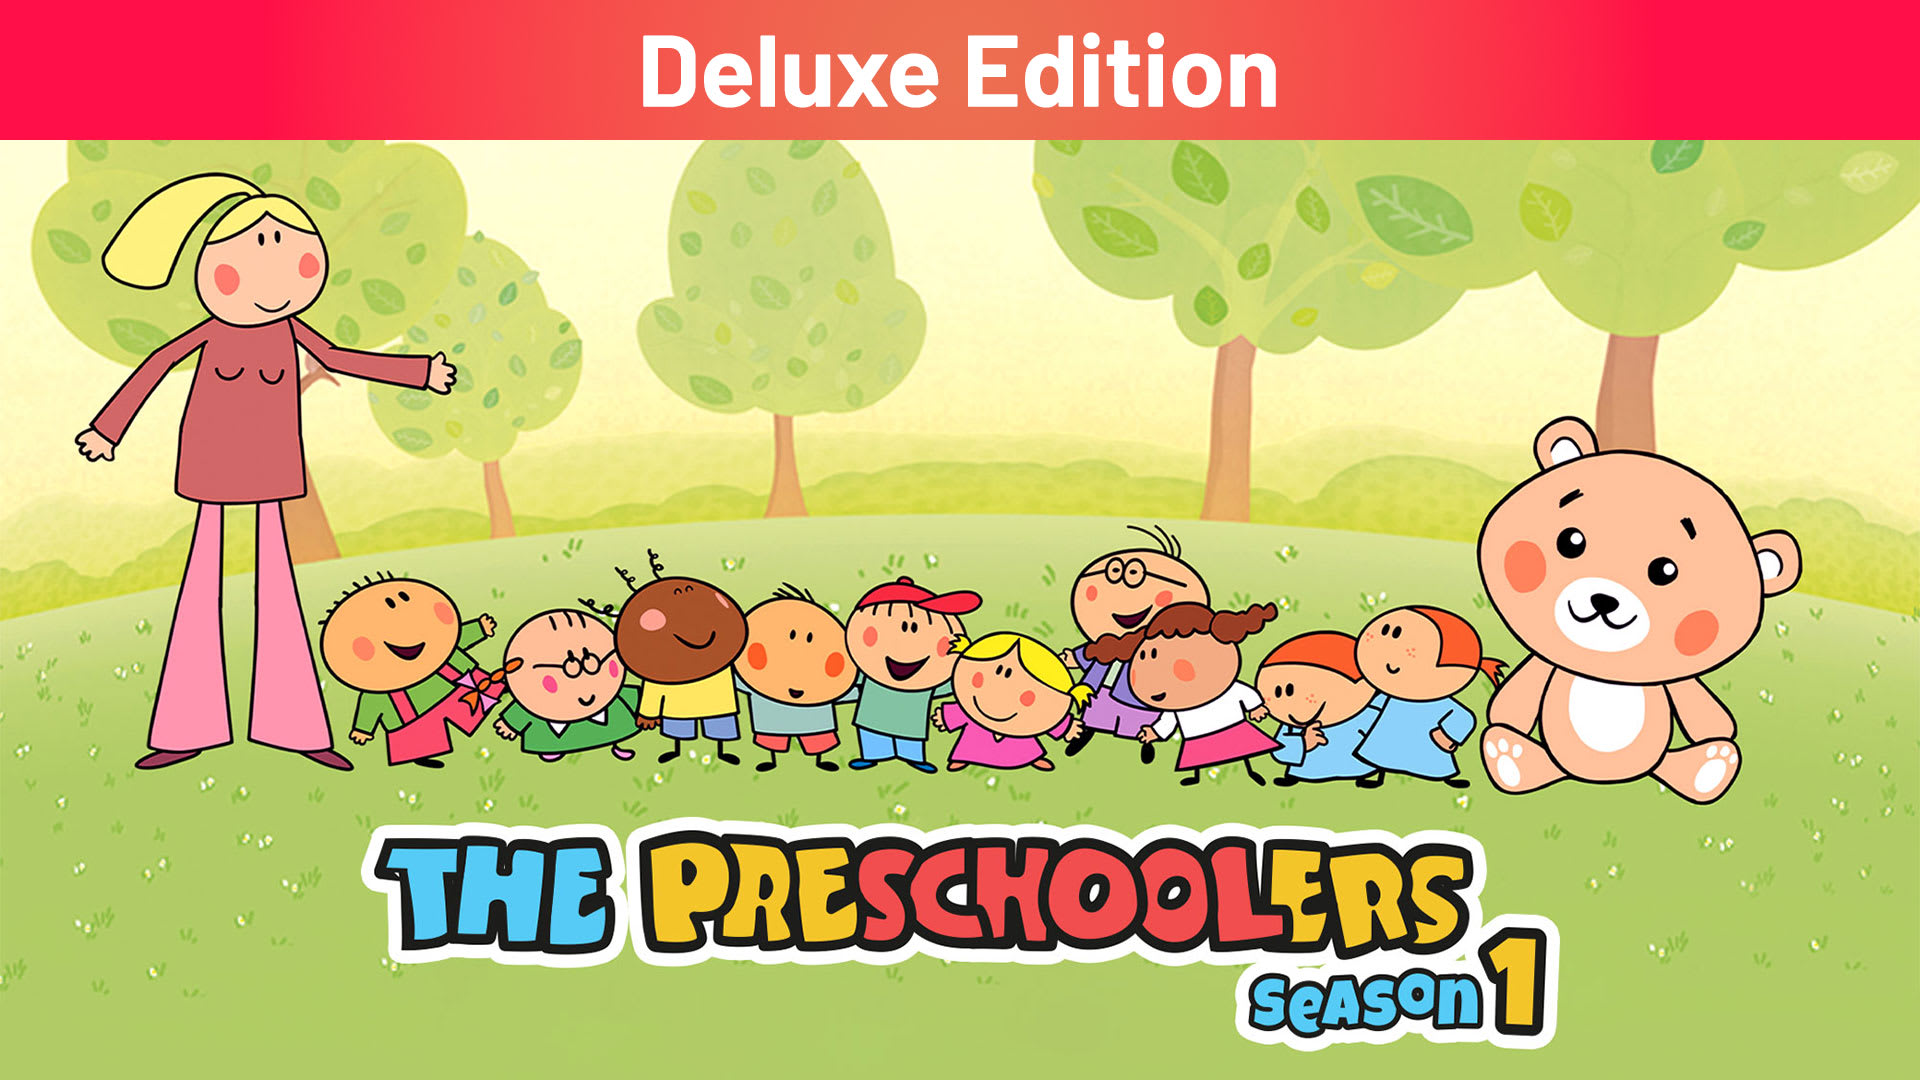 The Preschoolers: Season 1 Deluxe Edition